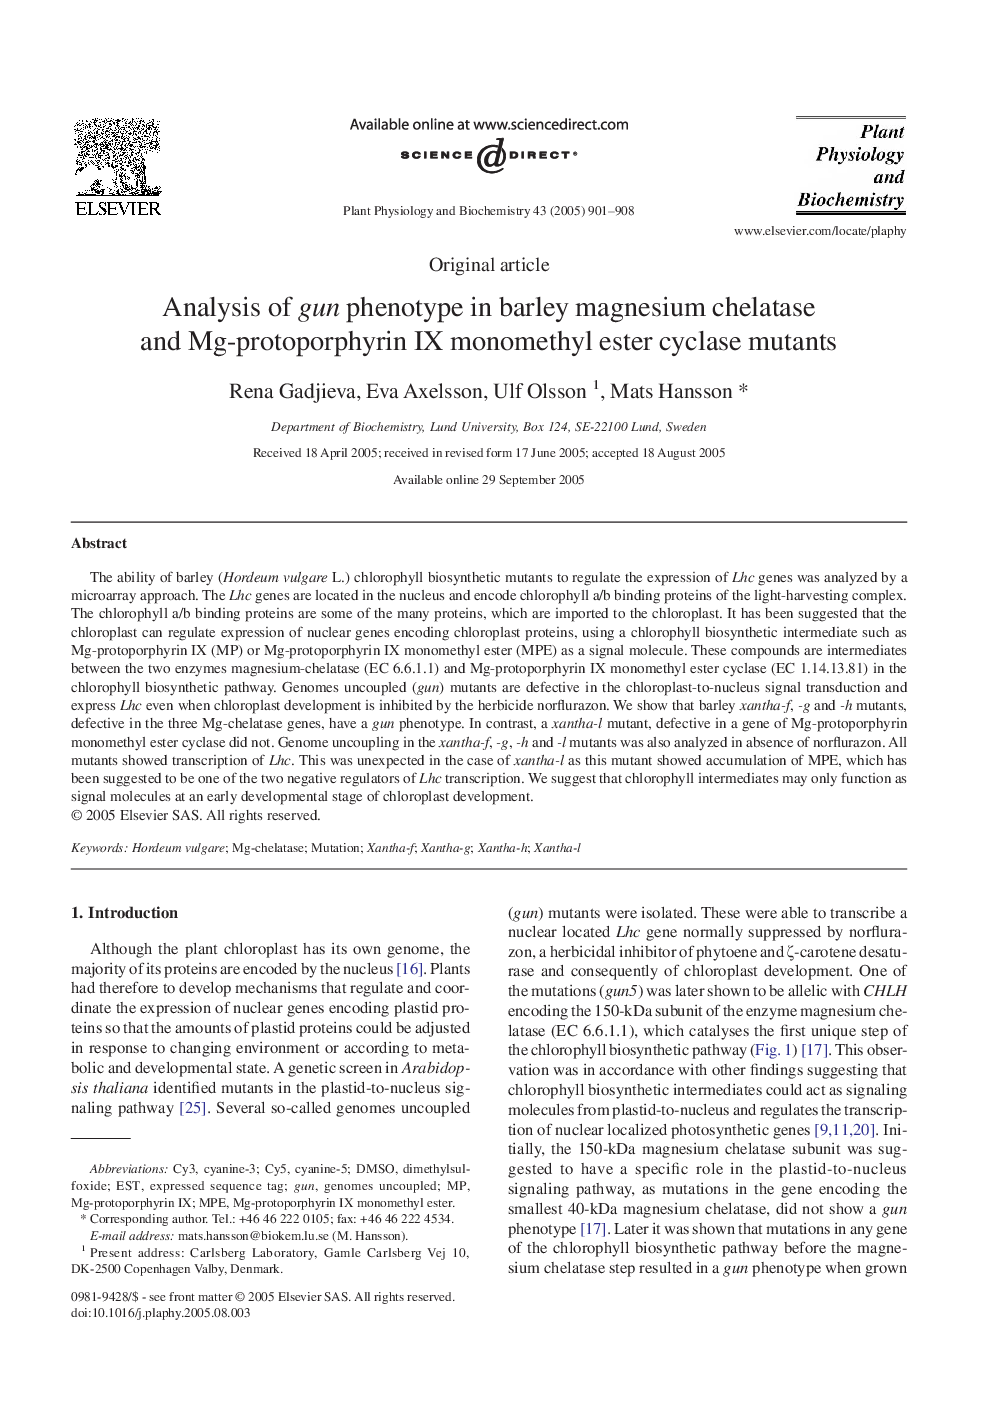 Analysis of gun phenotype in barley magnesium chelatase and Mg-protoporphyrin IX monomethyl ester cyclase mutants